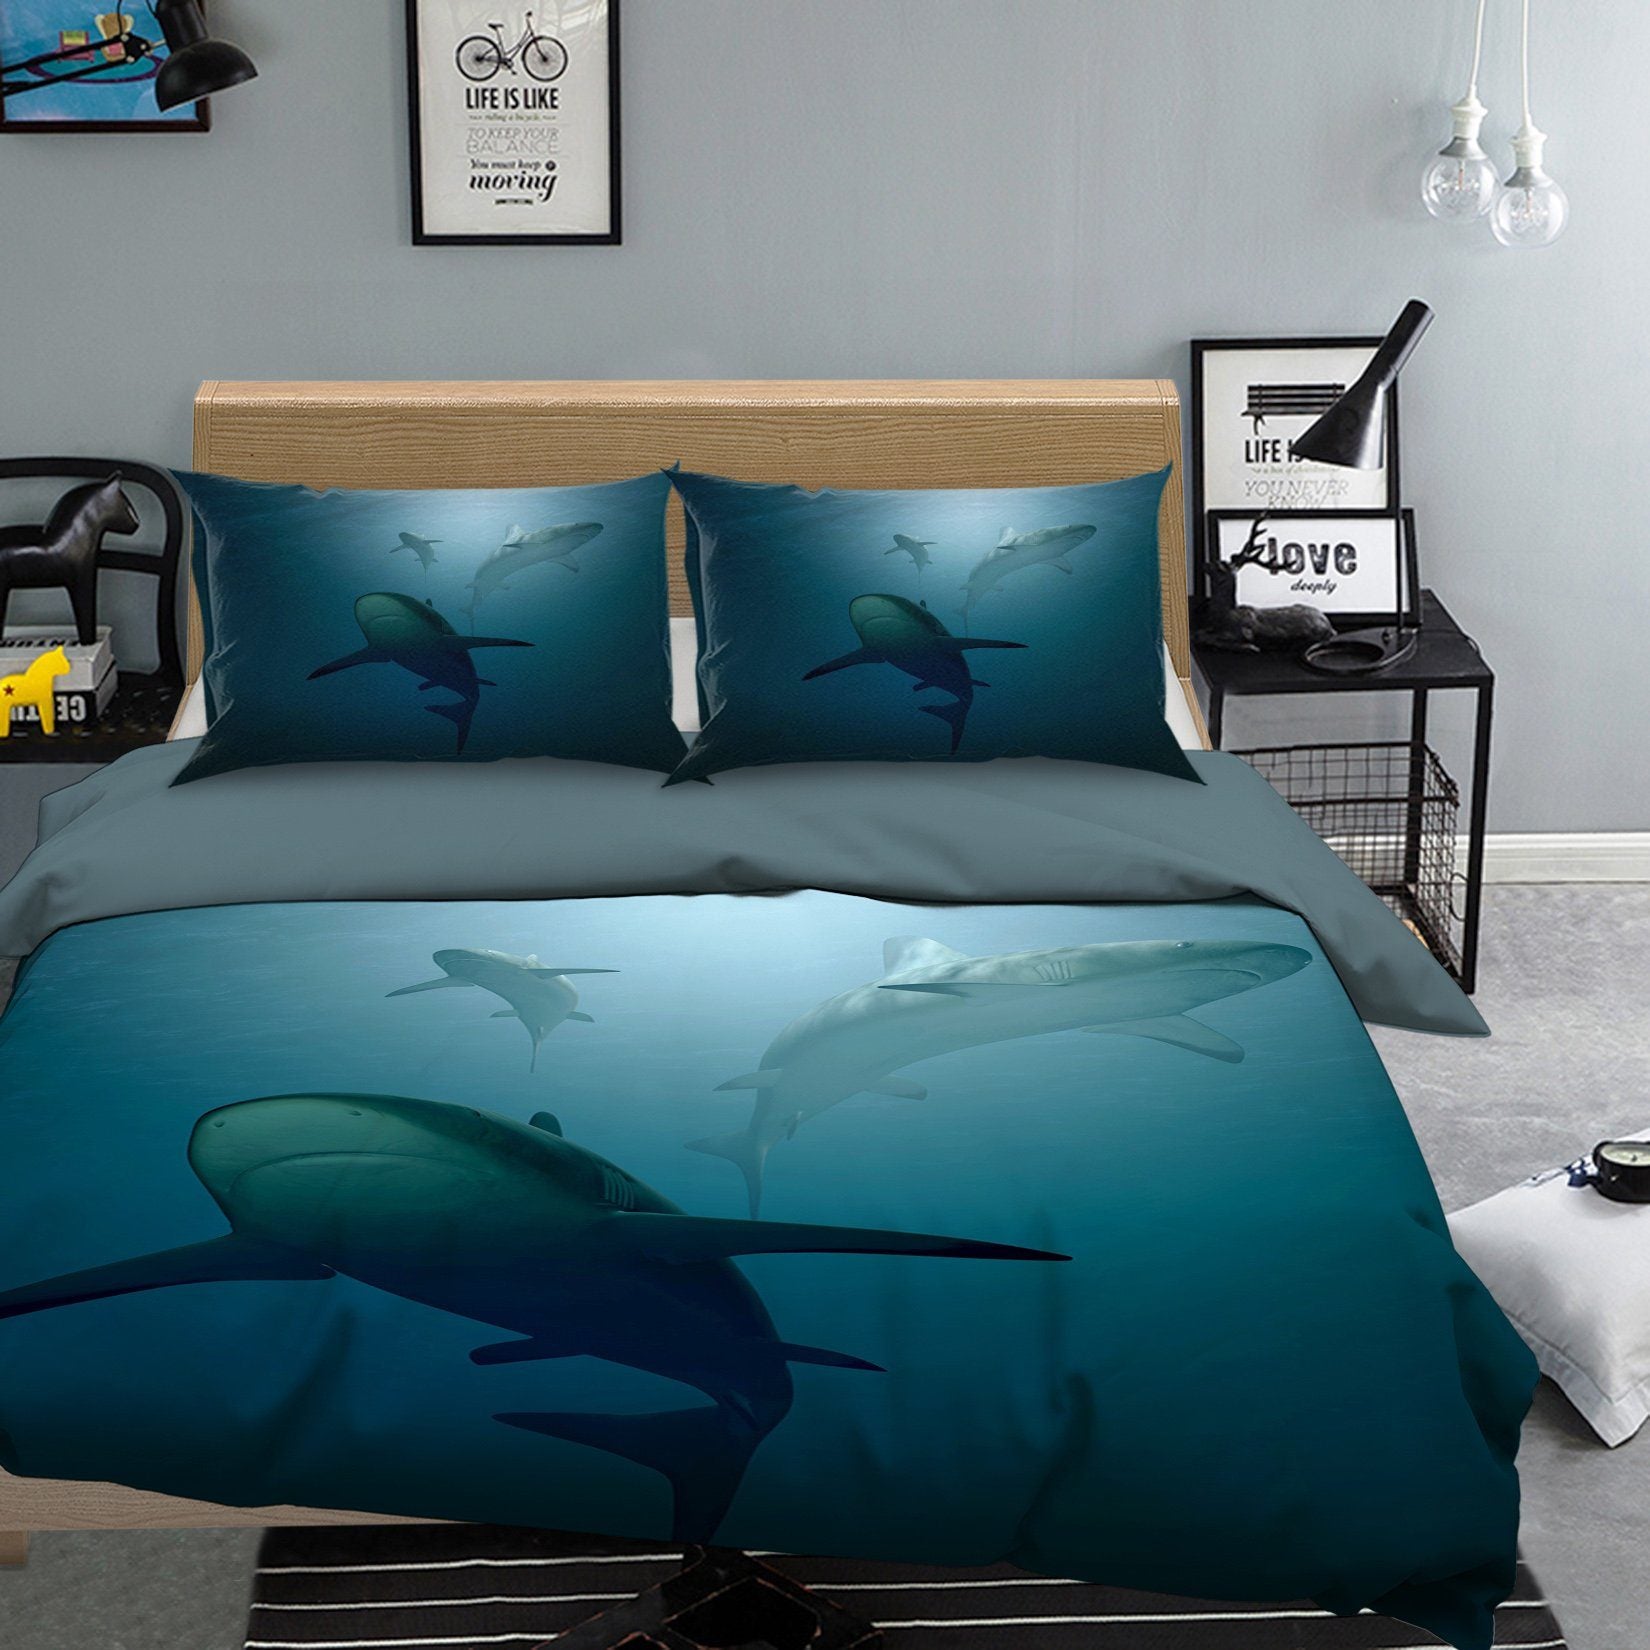 3D Deep Sea Shark 1953 Bed Pillowcases Quilt Quiet Covers AJ Creativity Home 